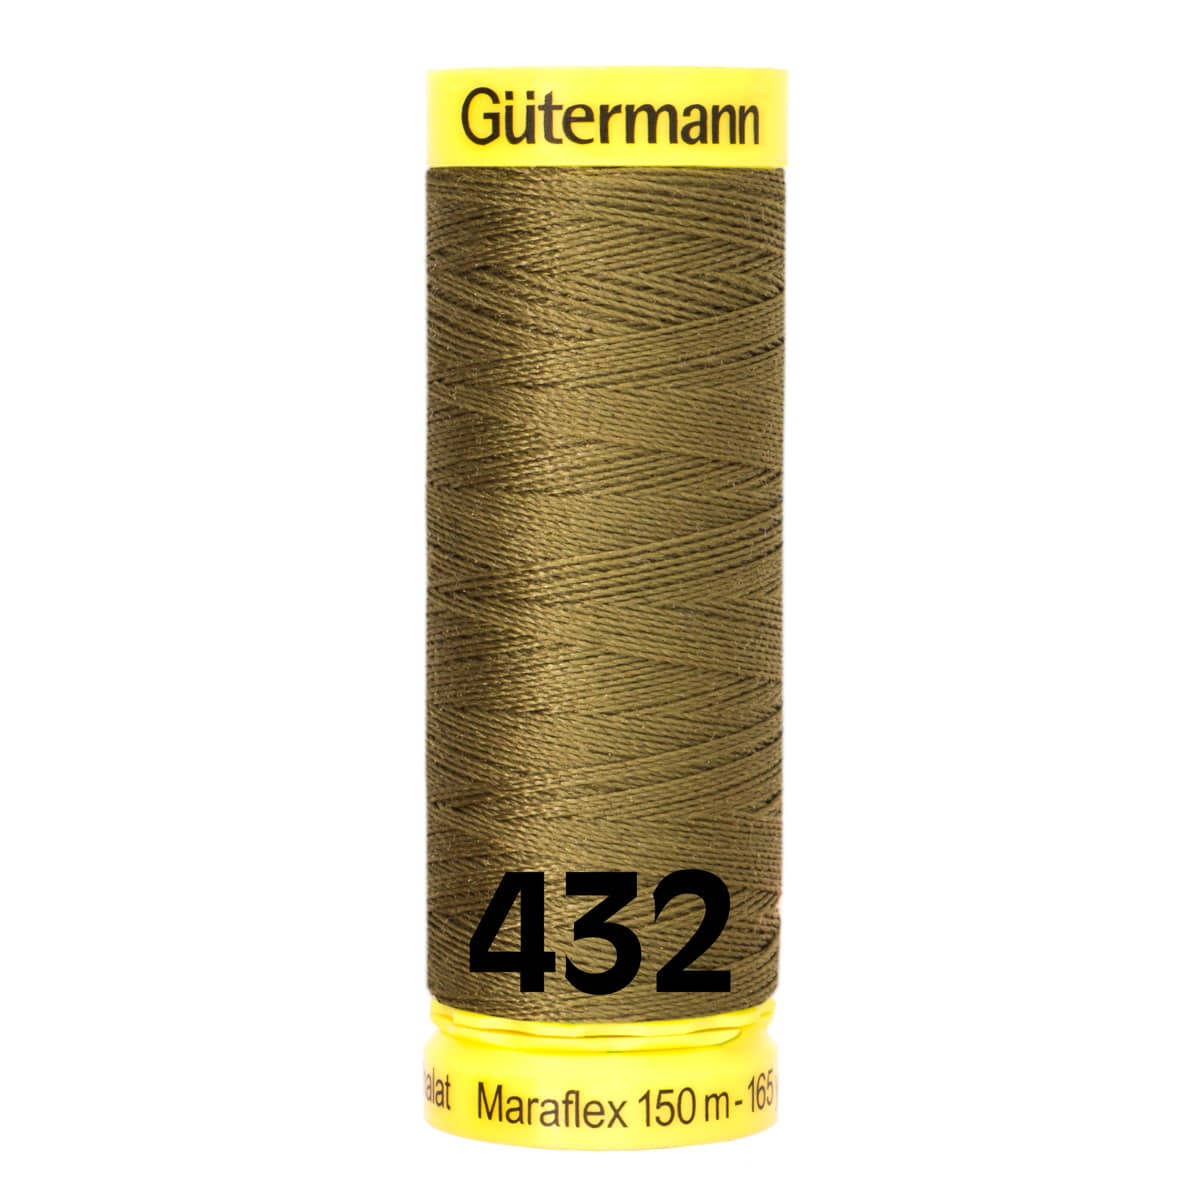 Gütermann MaraFlex 150m - 432 olijf groen GUTERMANN-MARAFLEX-150-432 4029394998683 - Fourniturenkraam.nl